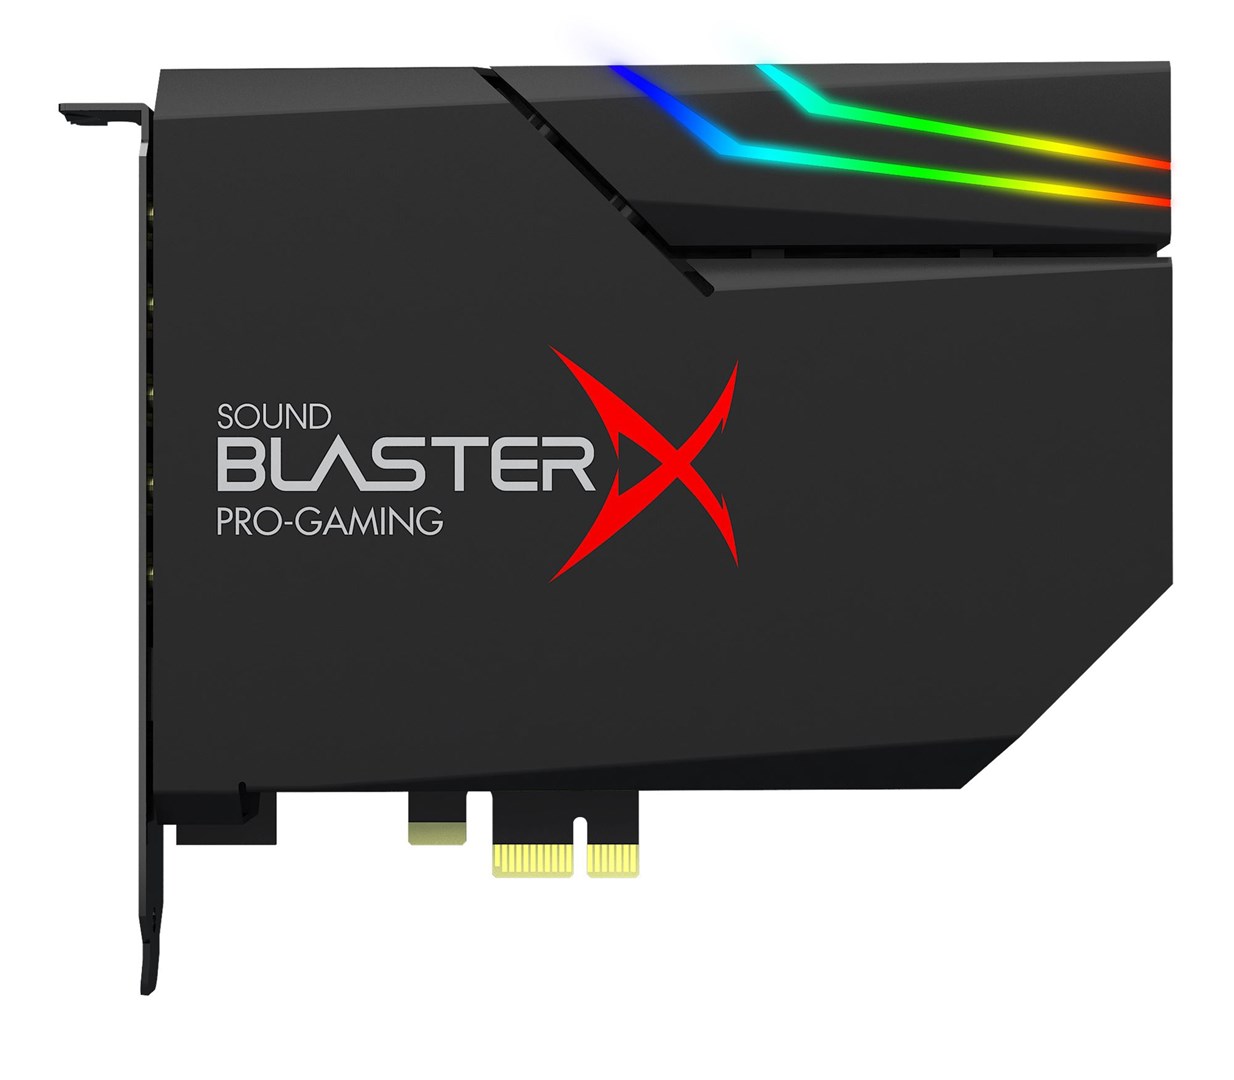 Creative Sound BlasterX AE-5